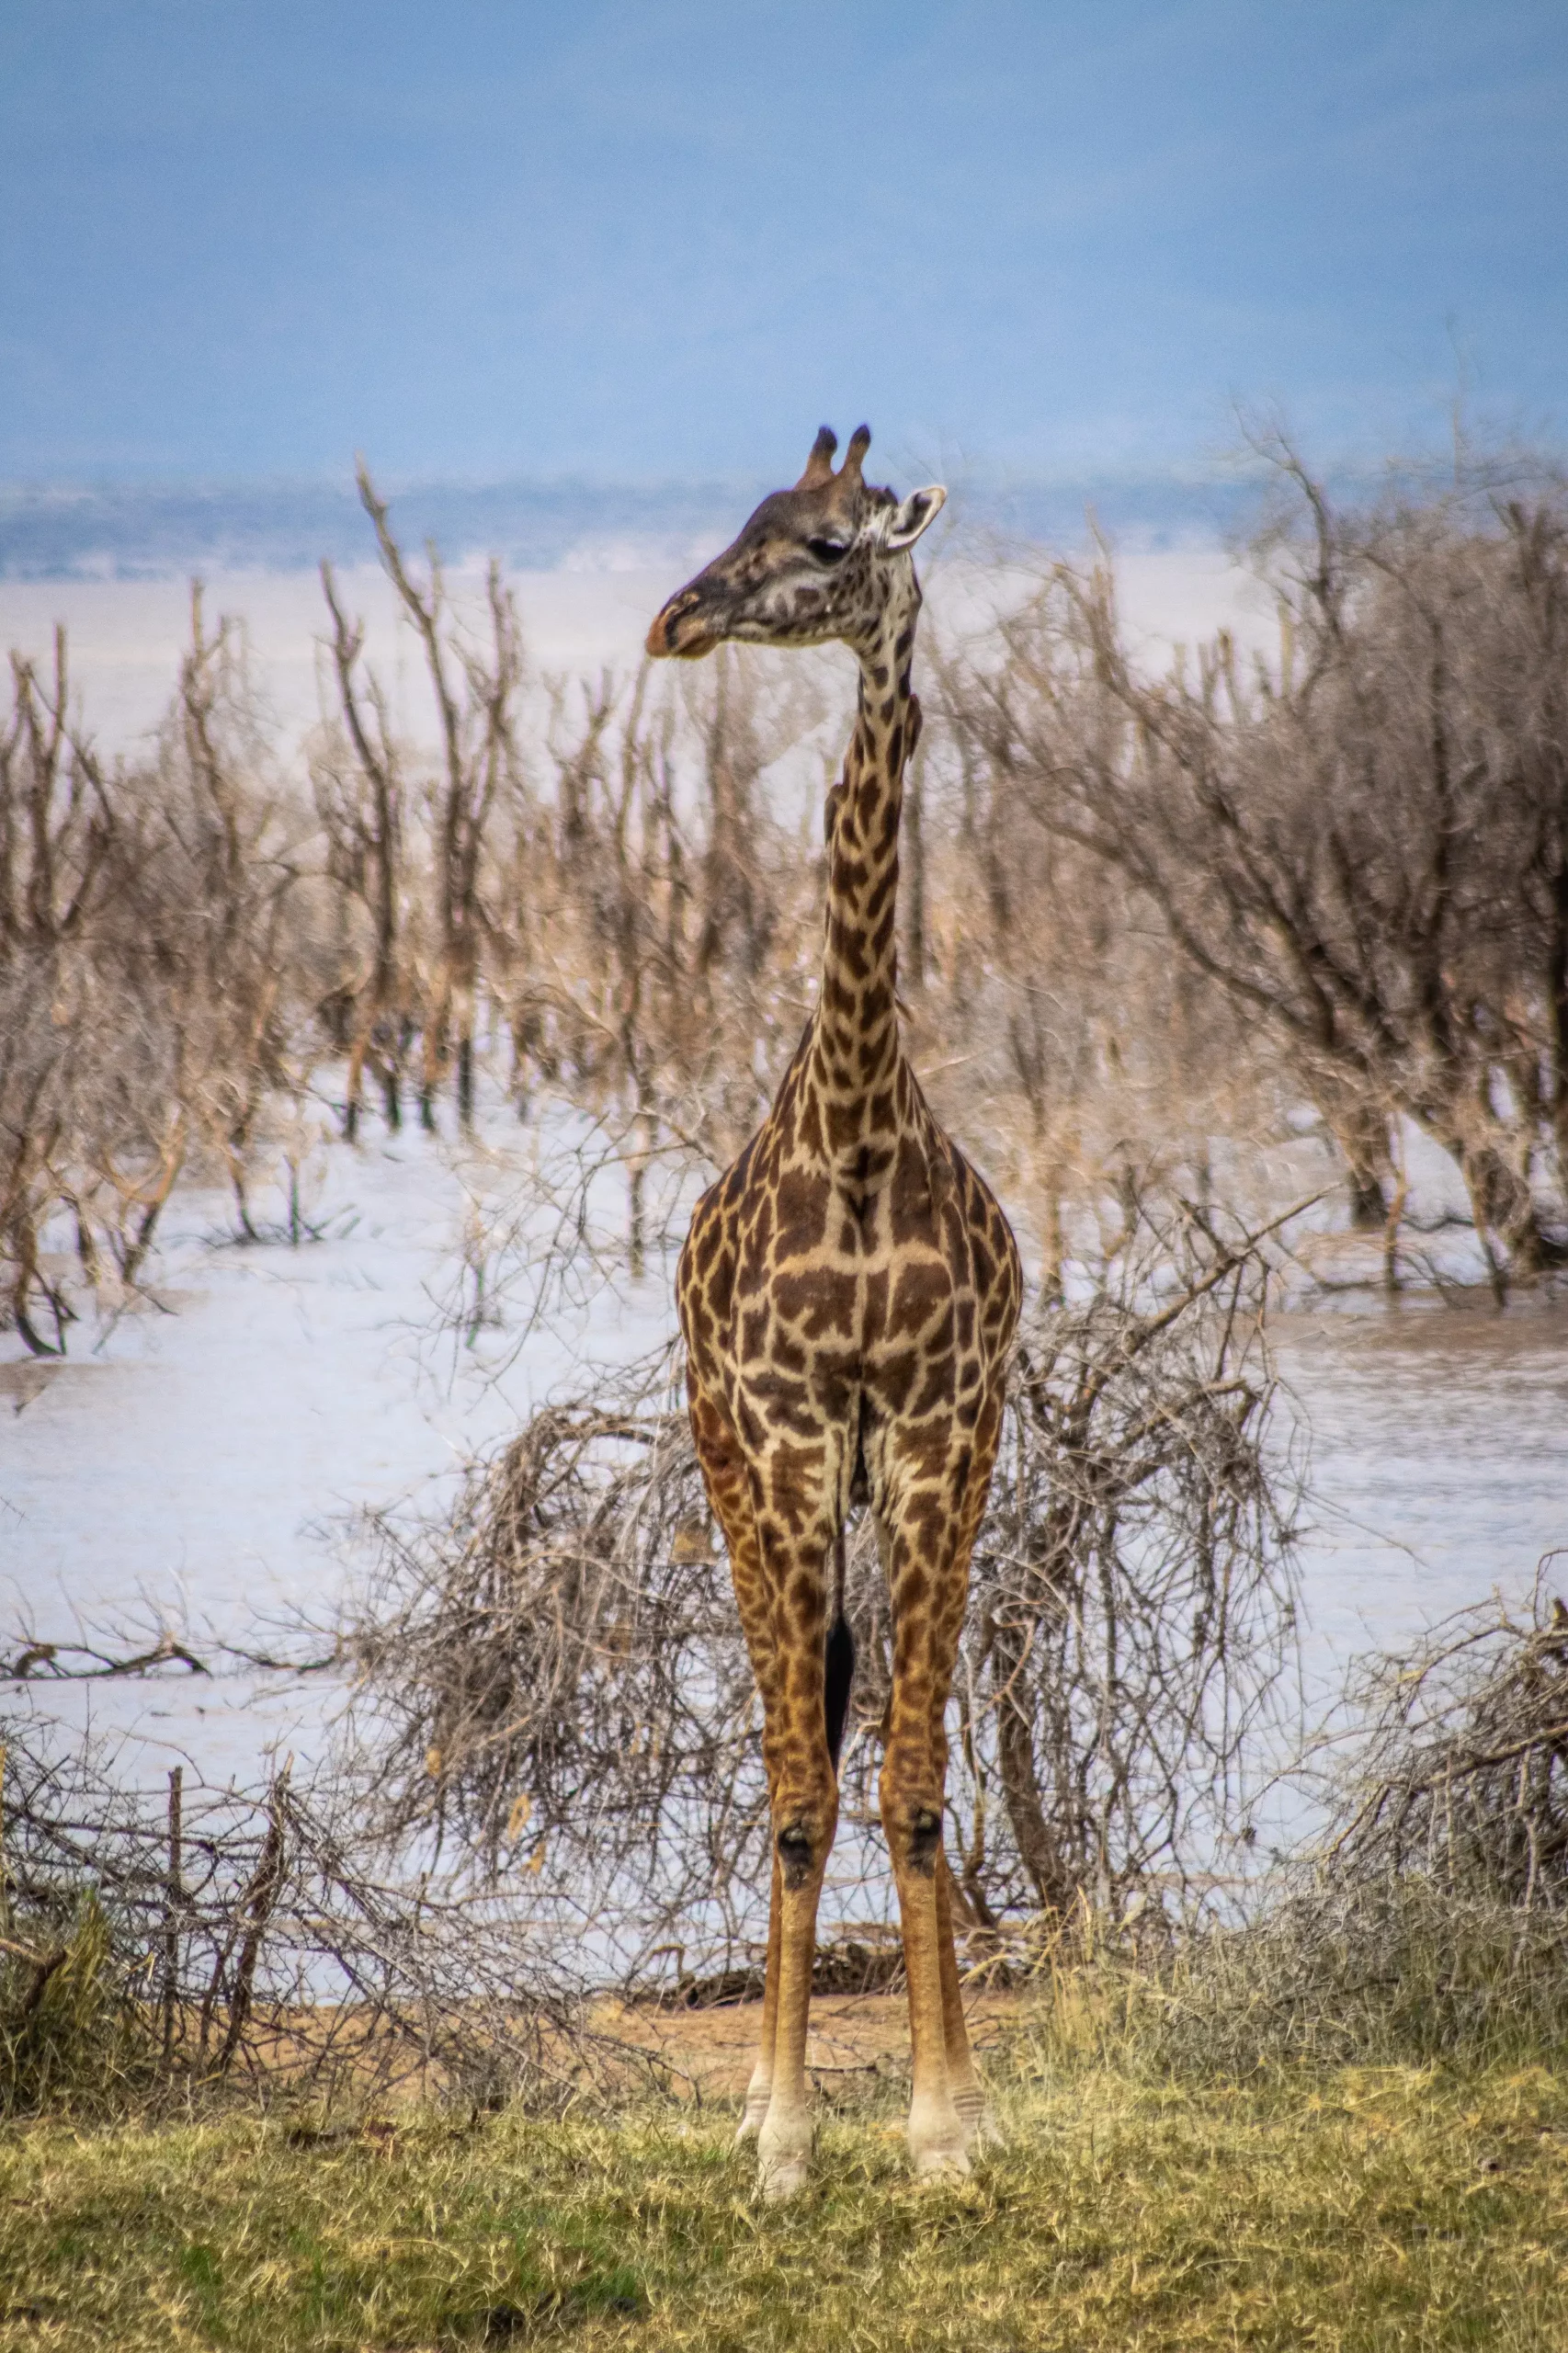 Giraffe walking around near a lake in Tanzania